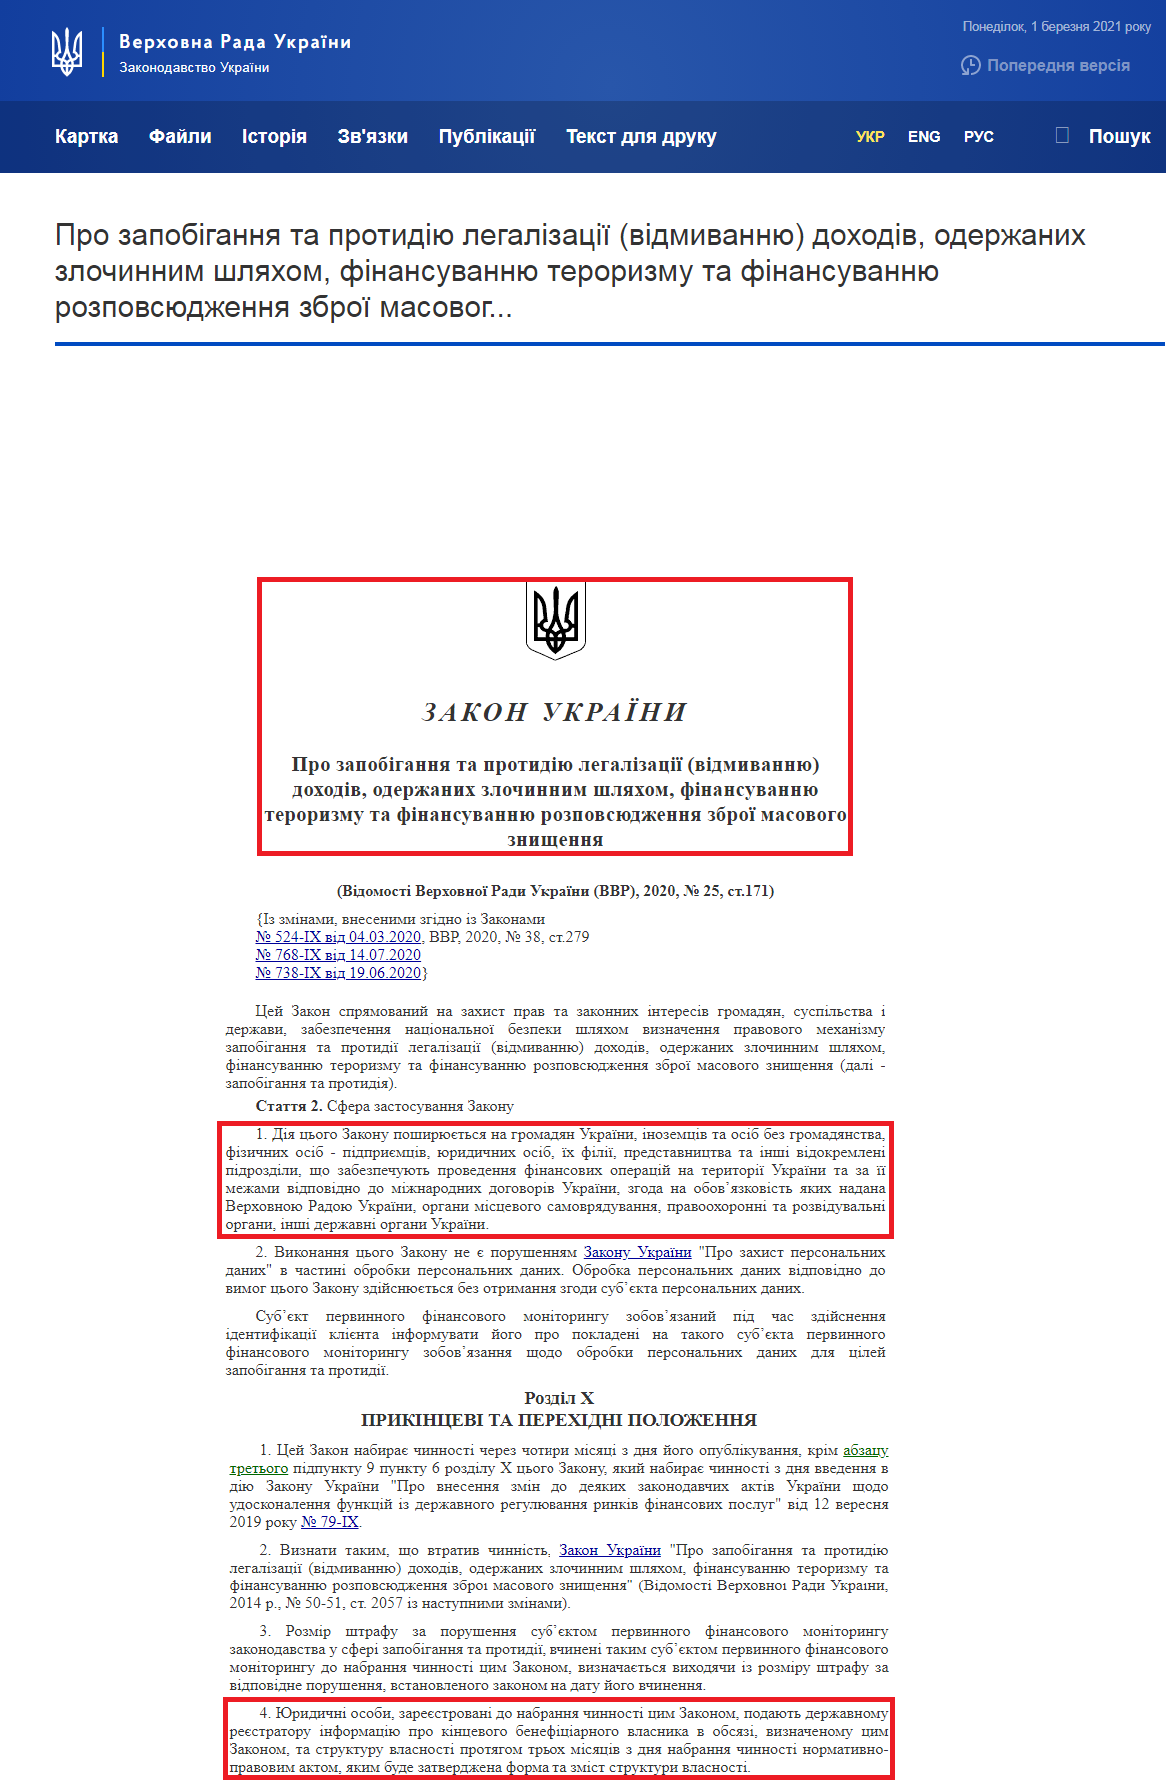 https://zakon.rada.gov.ua/laws/show/361-20#Text